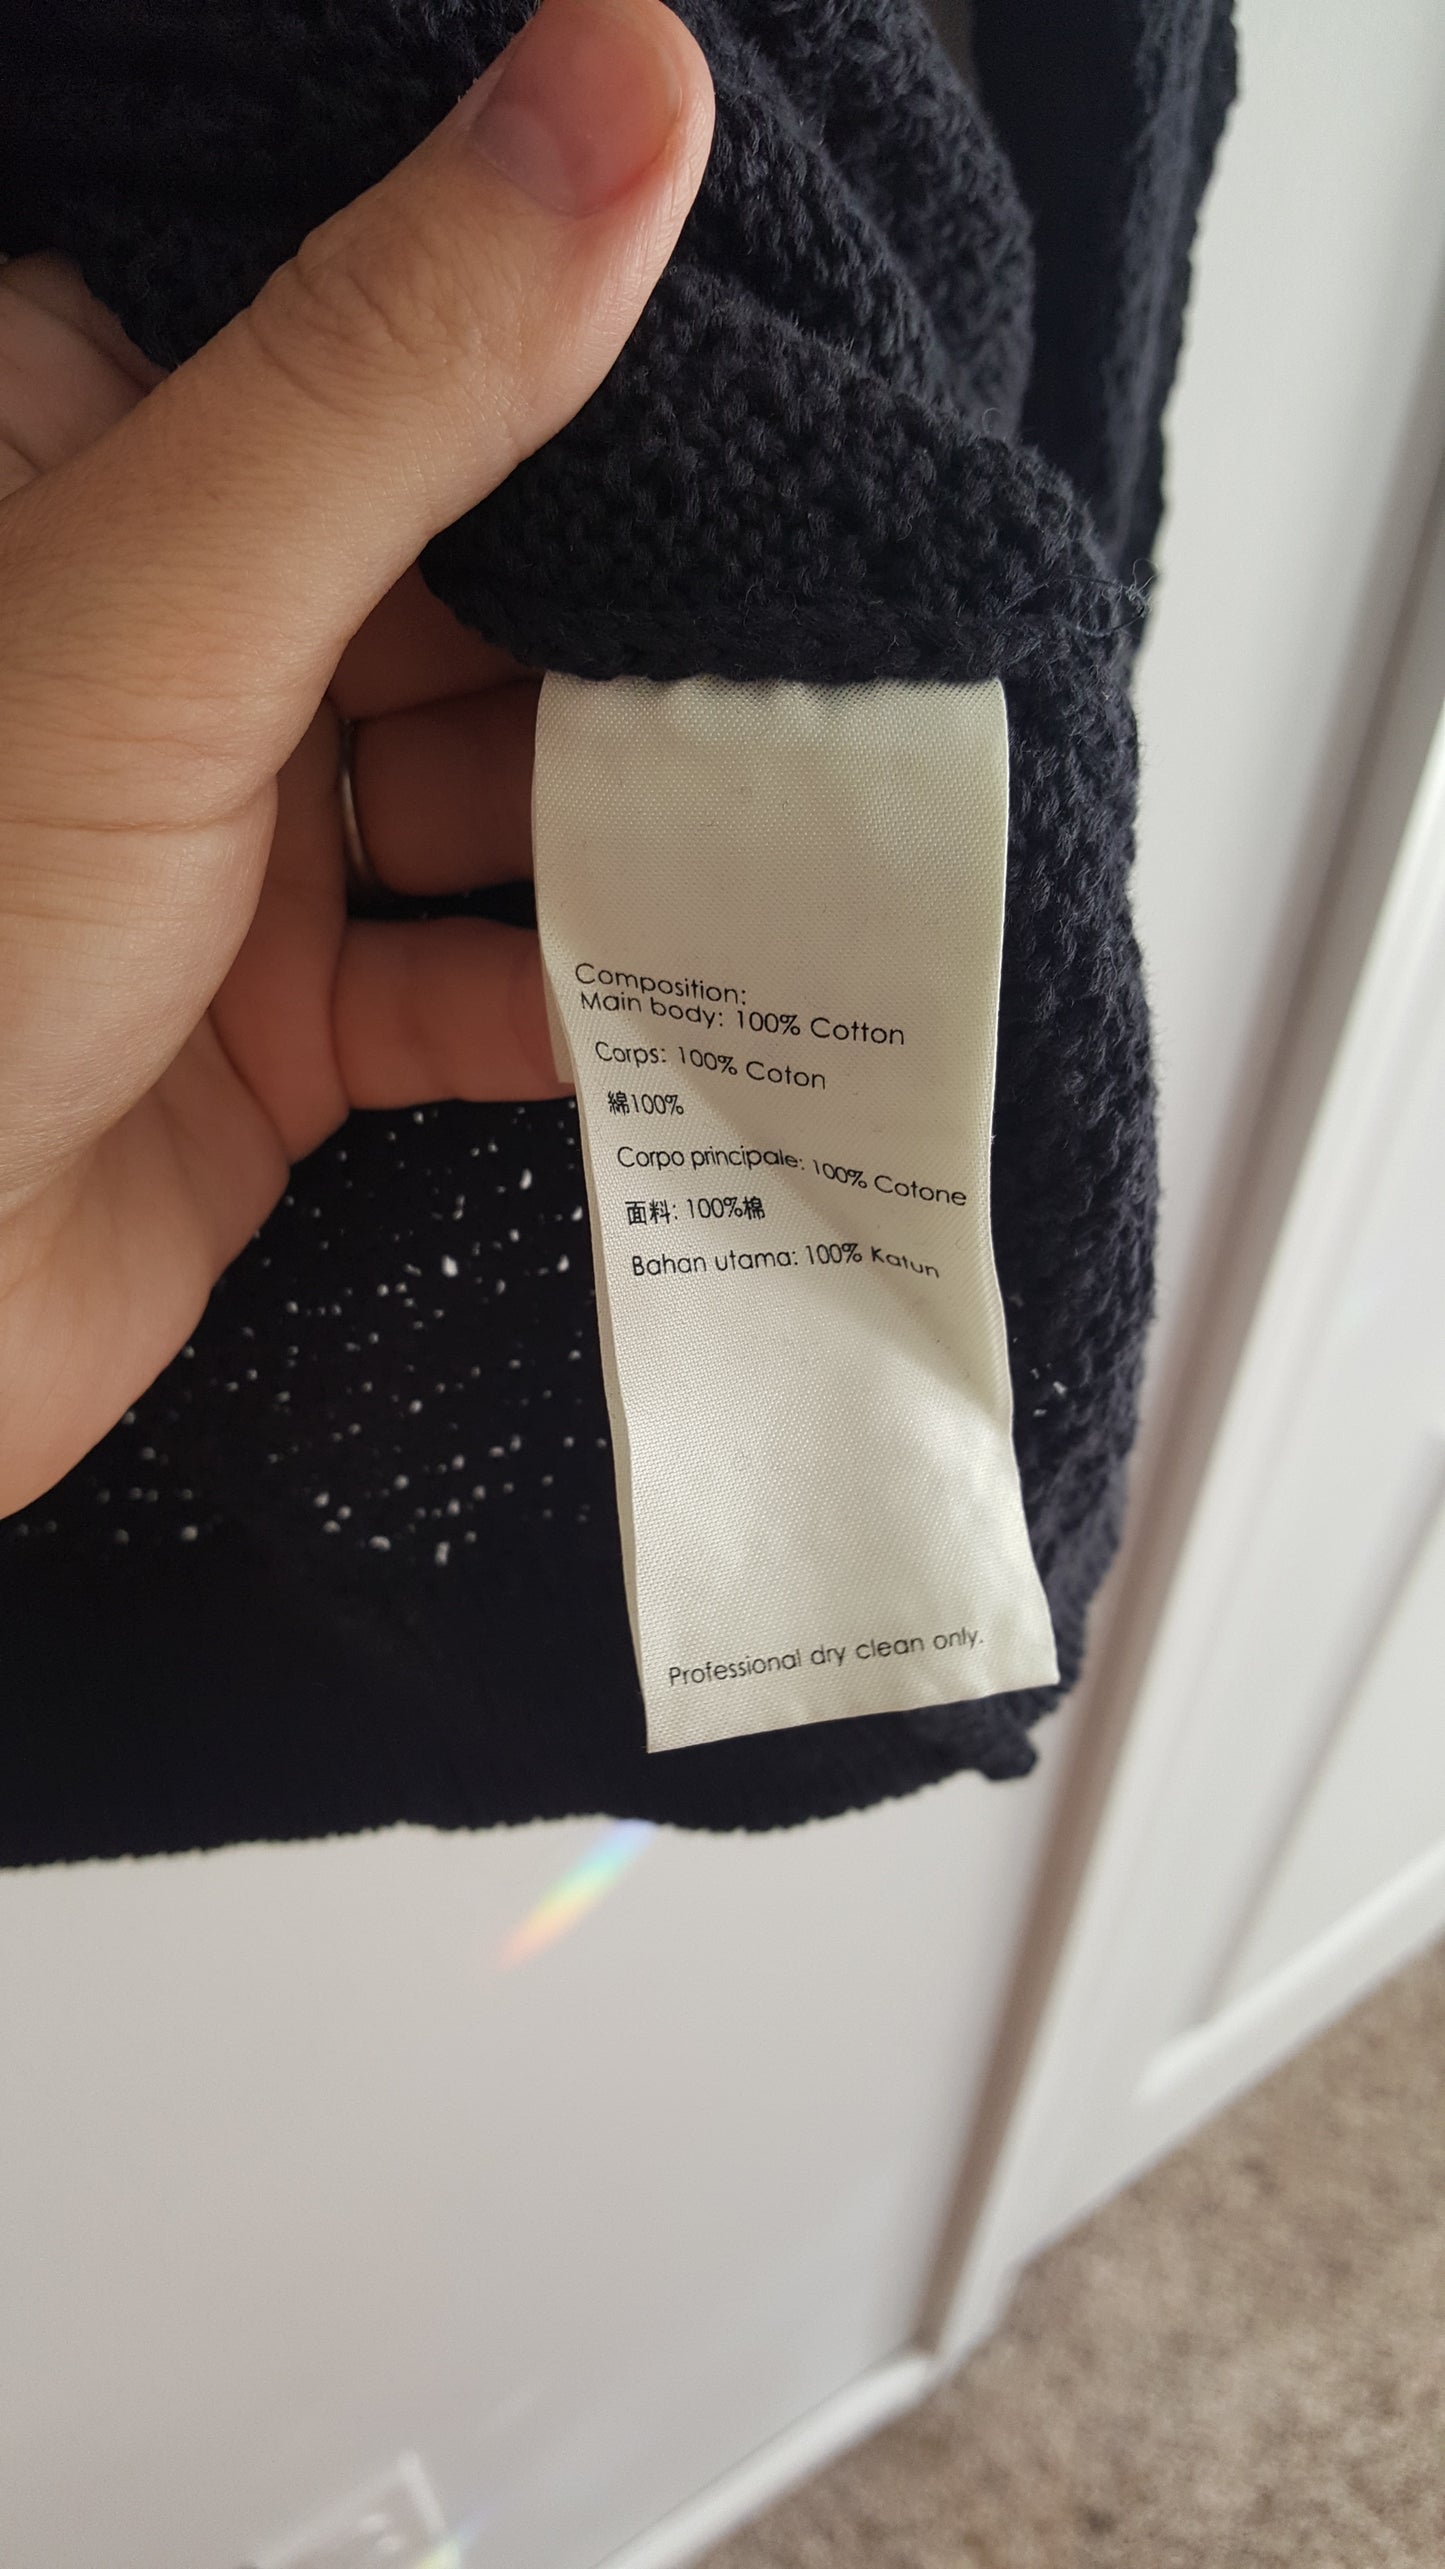 Philip Lim Sweater, Black, 100% Cotton, Size S